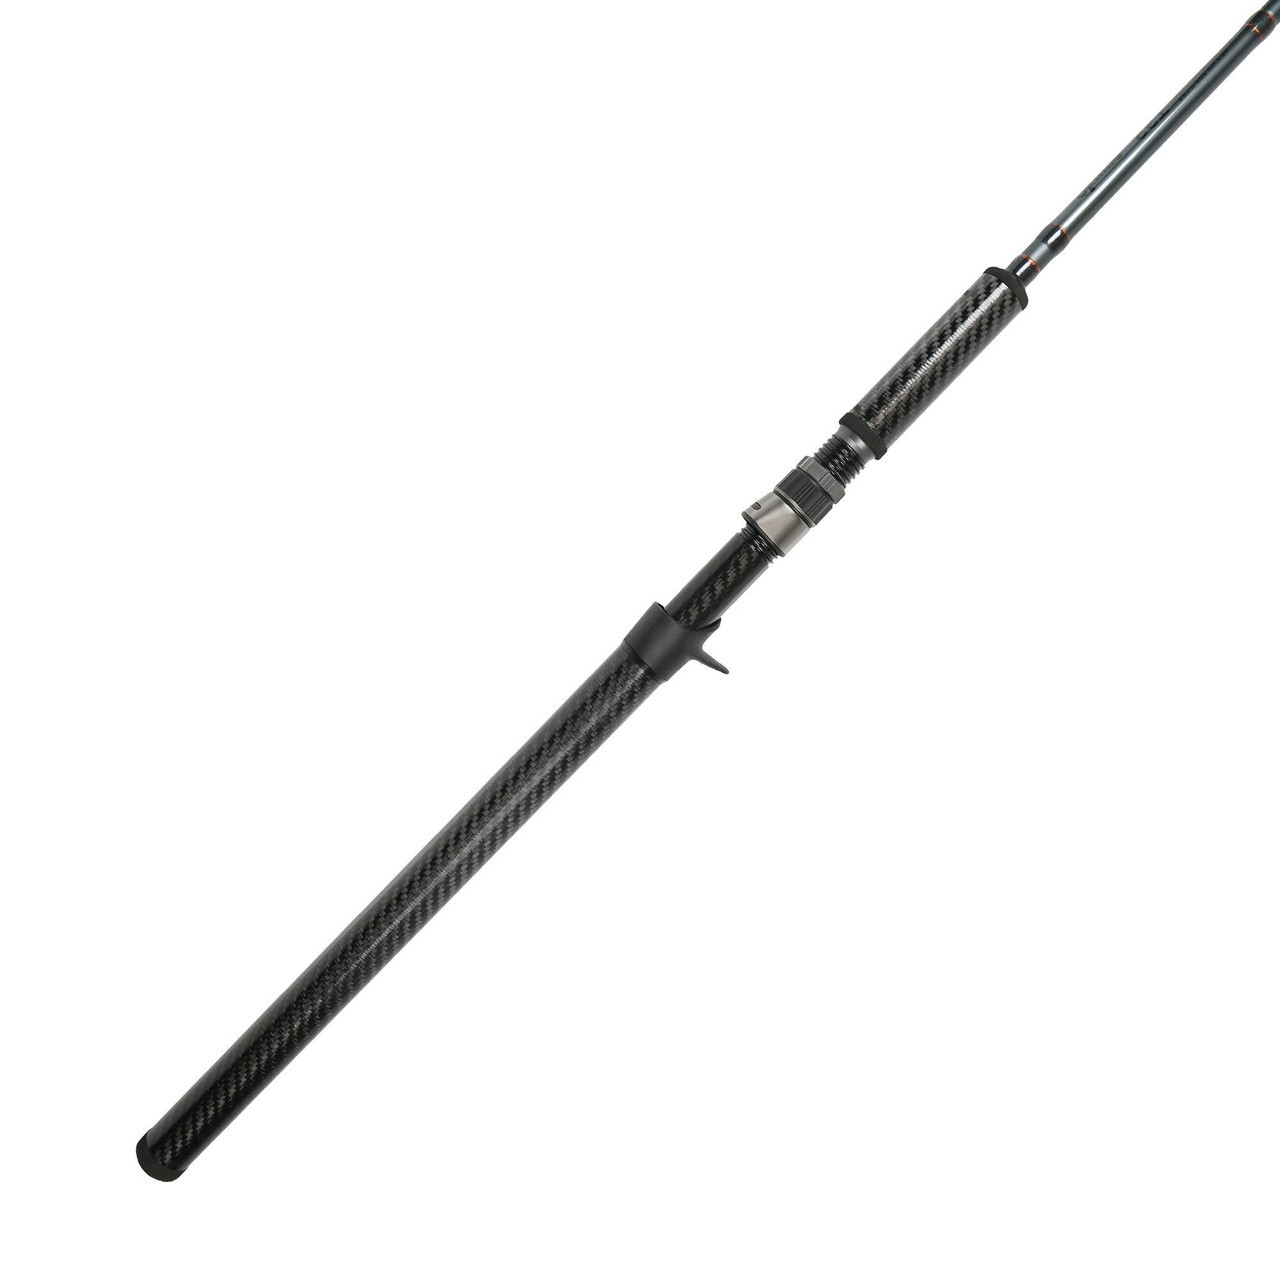 Okuma SST Carbon Grip Casting Rod - SST-C-862M-CGa